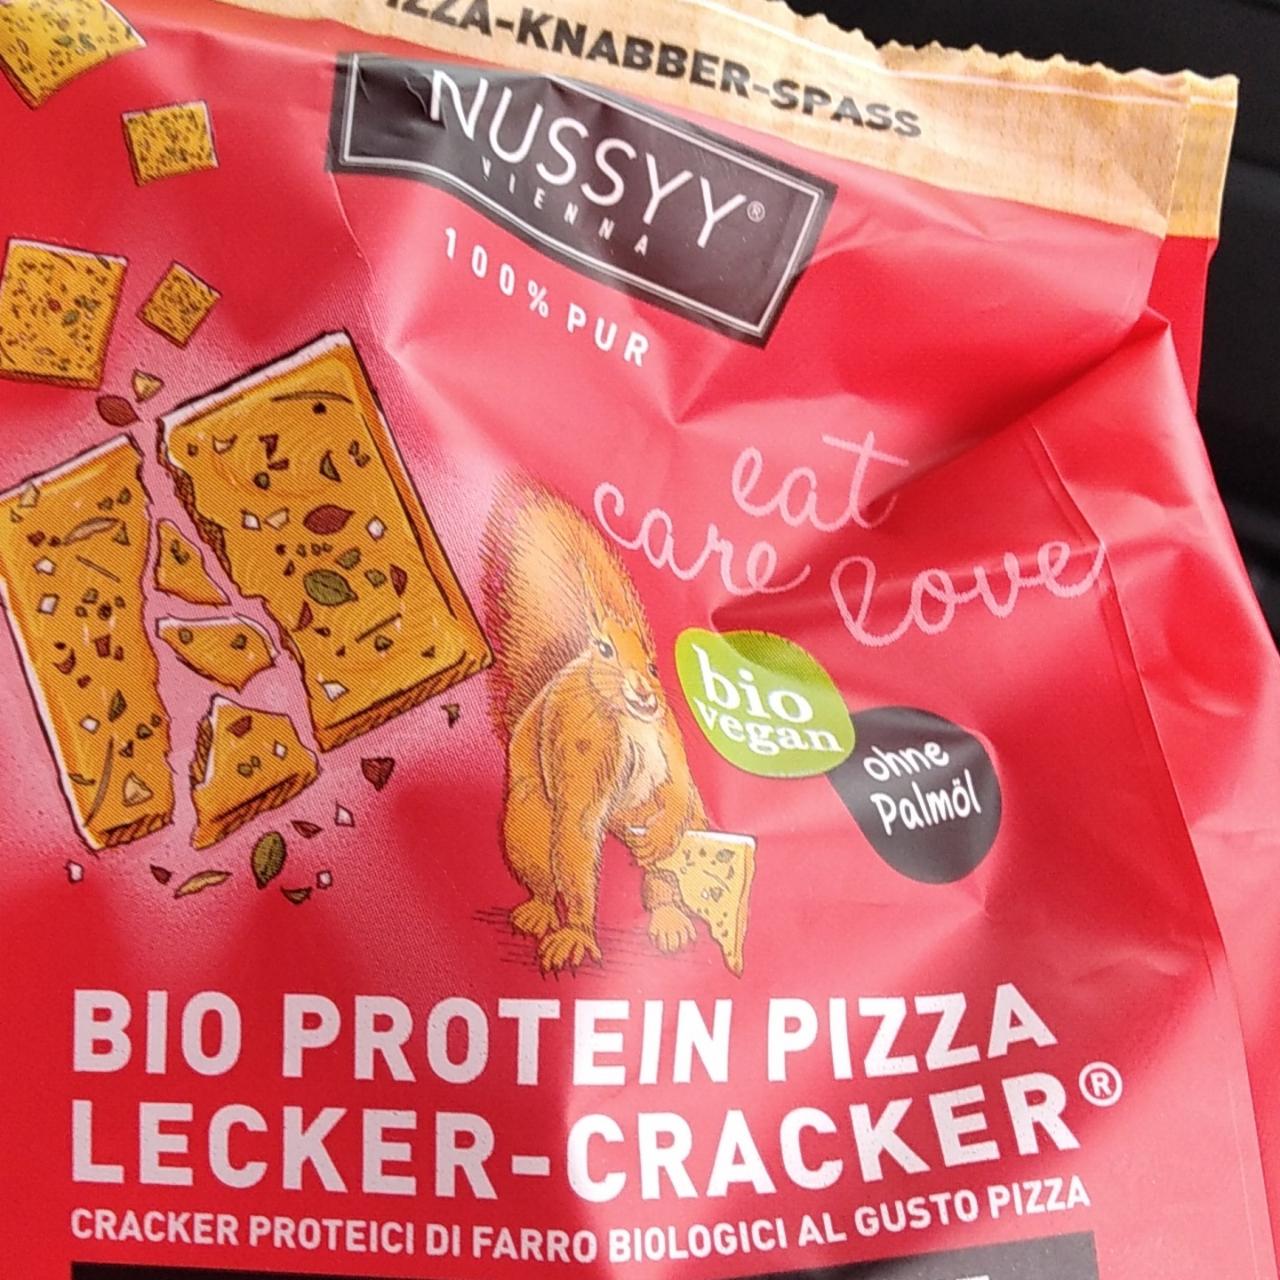 Fotografie - Bio Protein Pizza Lecker-Cracker Nussyy